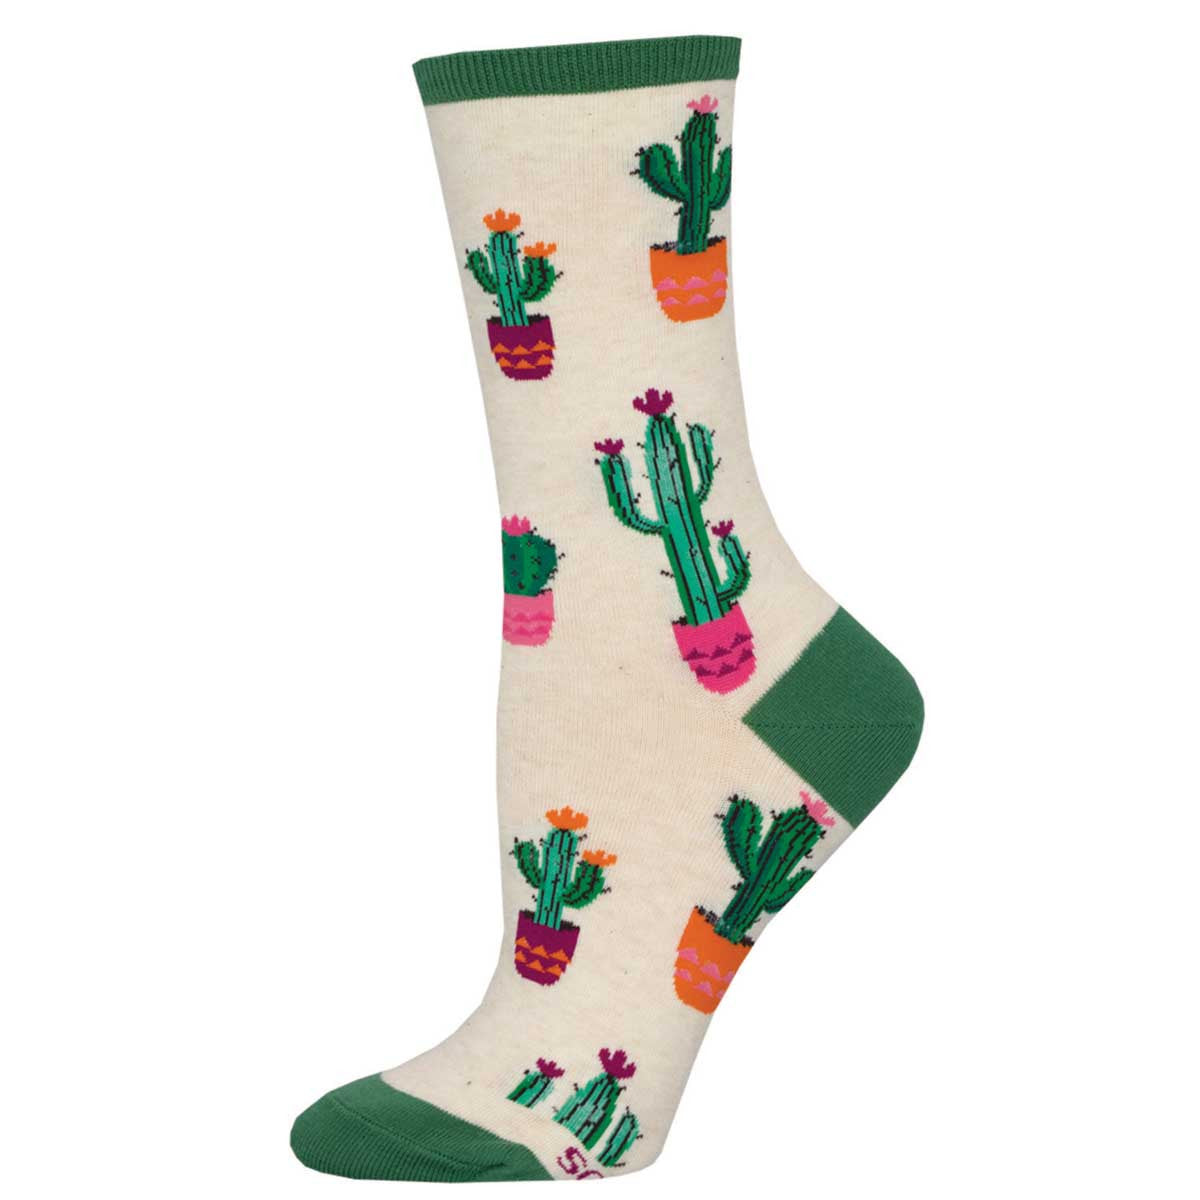 Court of Cactus Socks